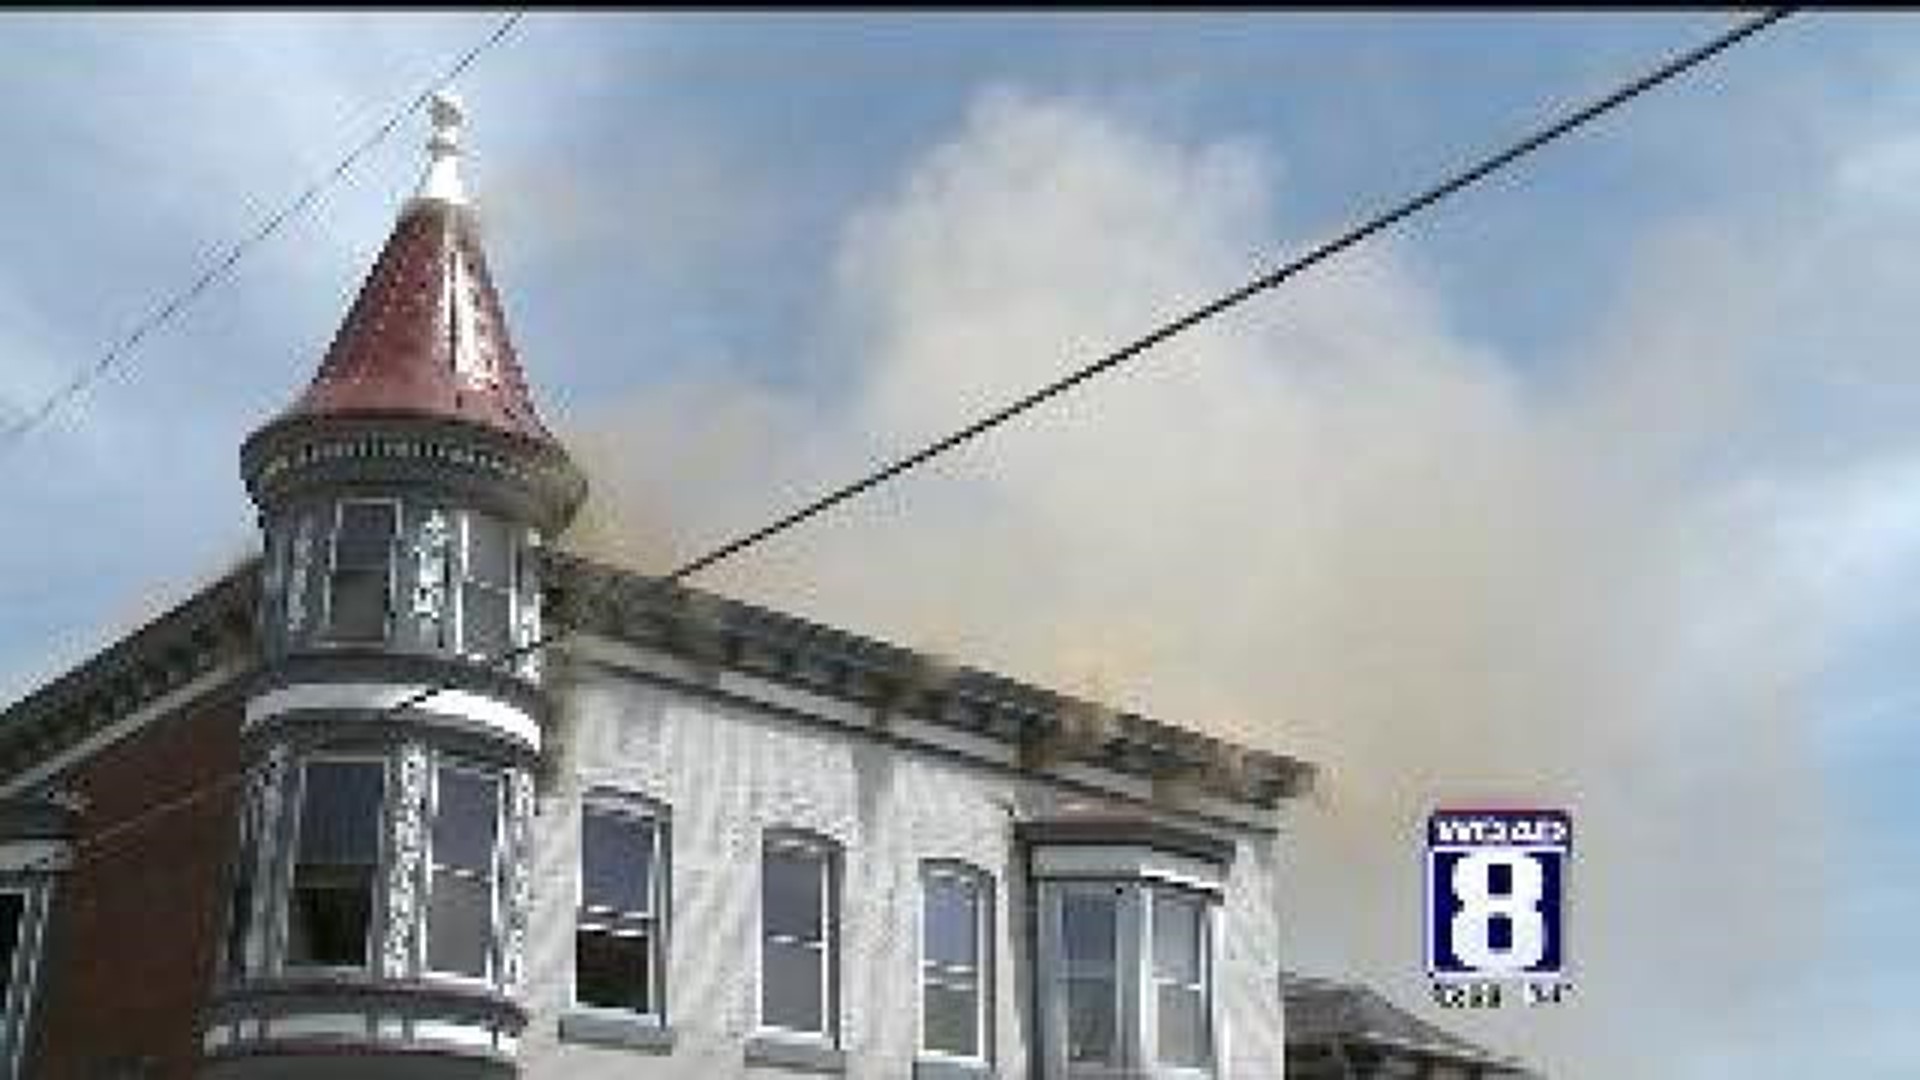 Fire devastates Historic Moline Building